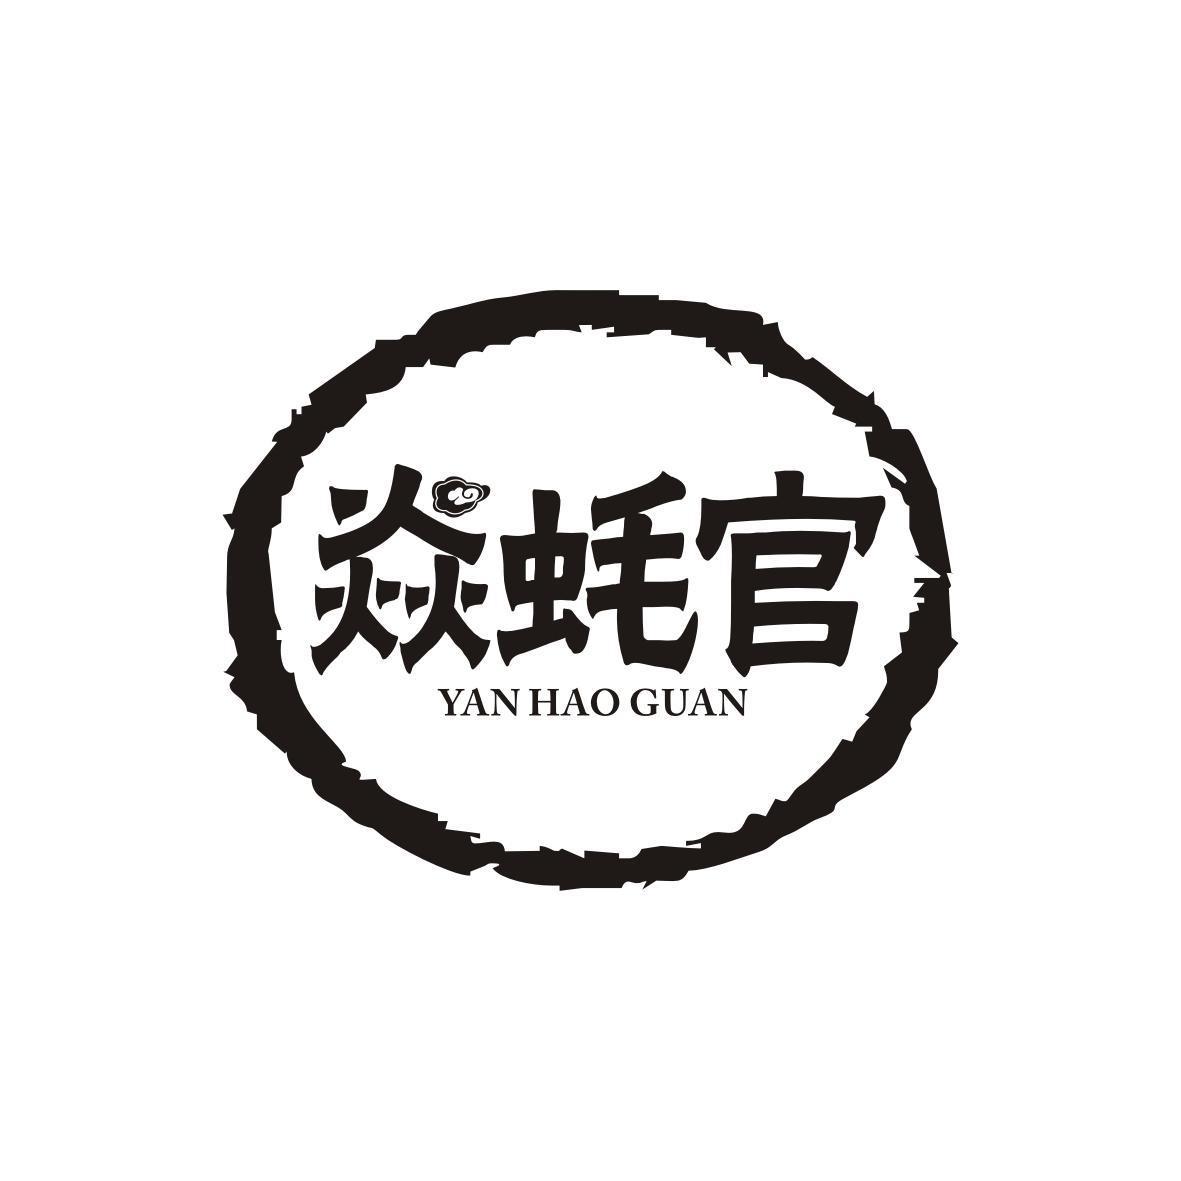 v-28791 焱蚝官
yan hao guan